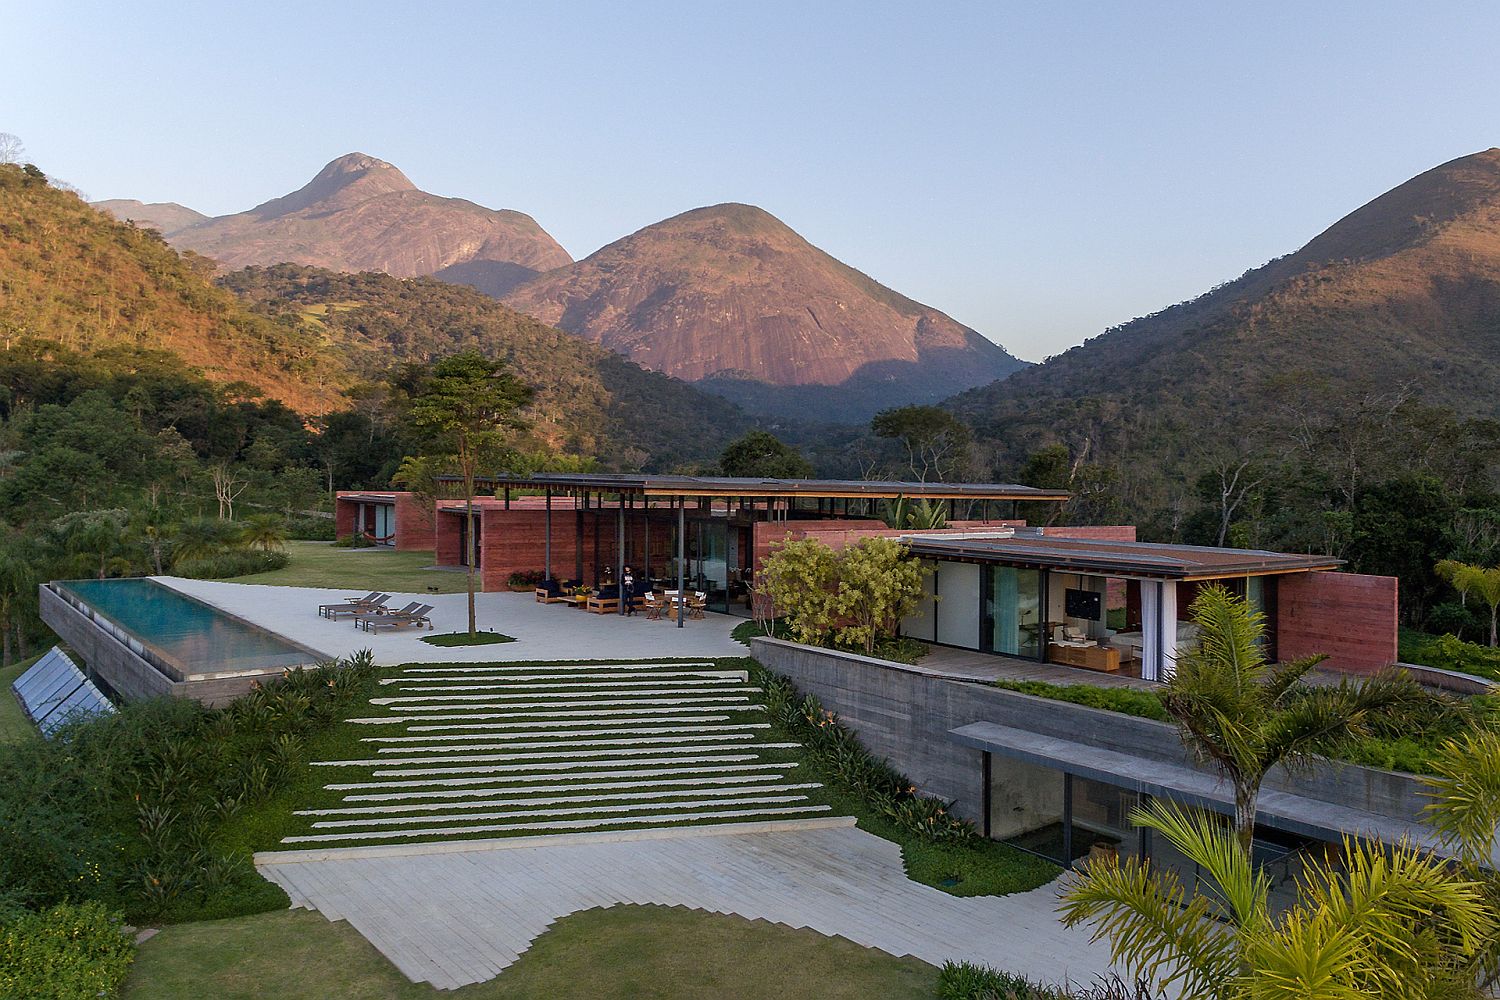 Multi-leve Casa Terra in Brazil